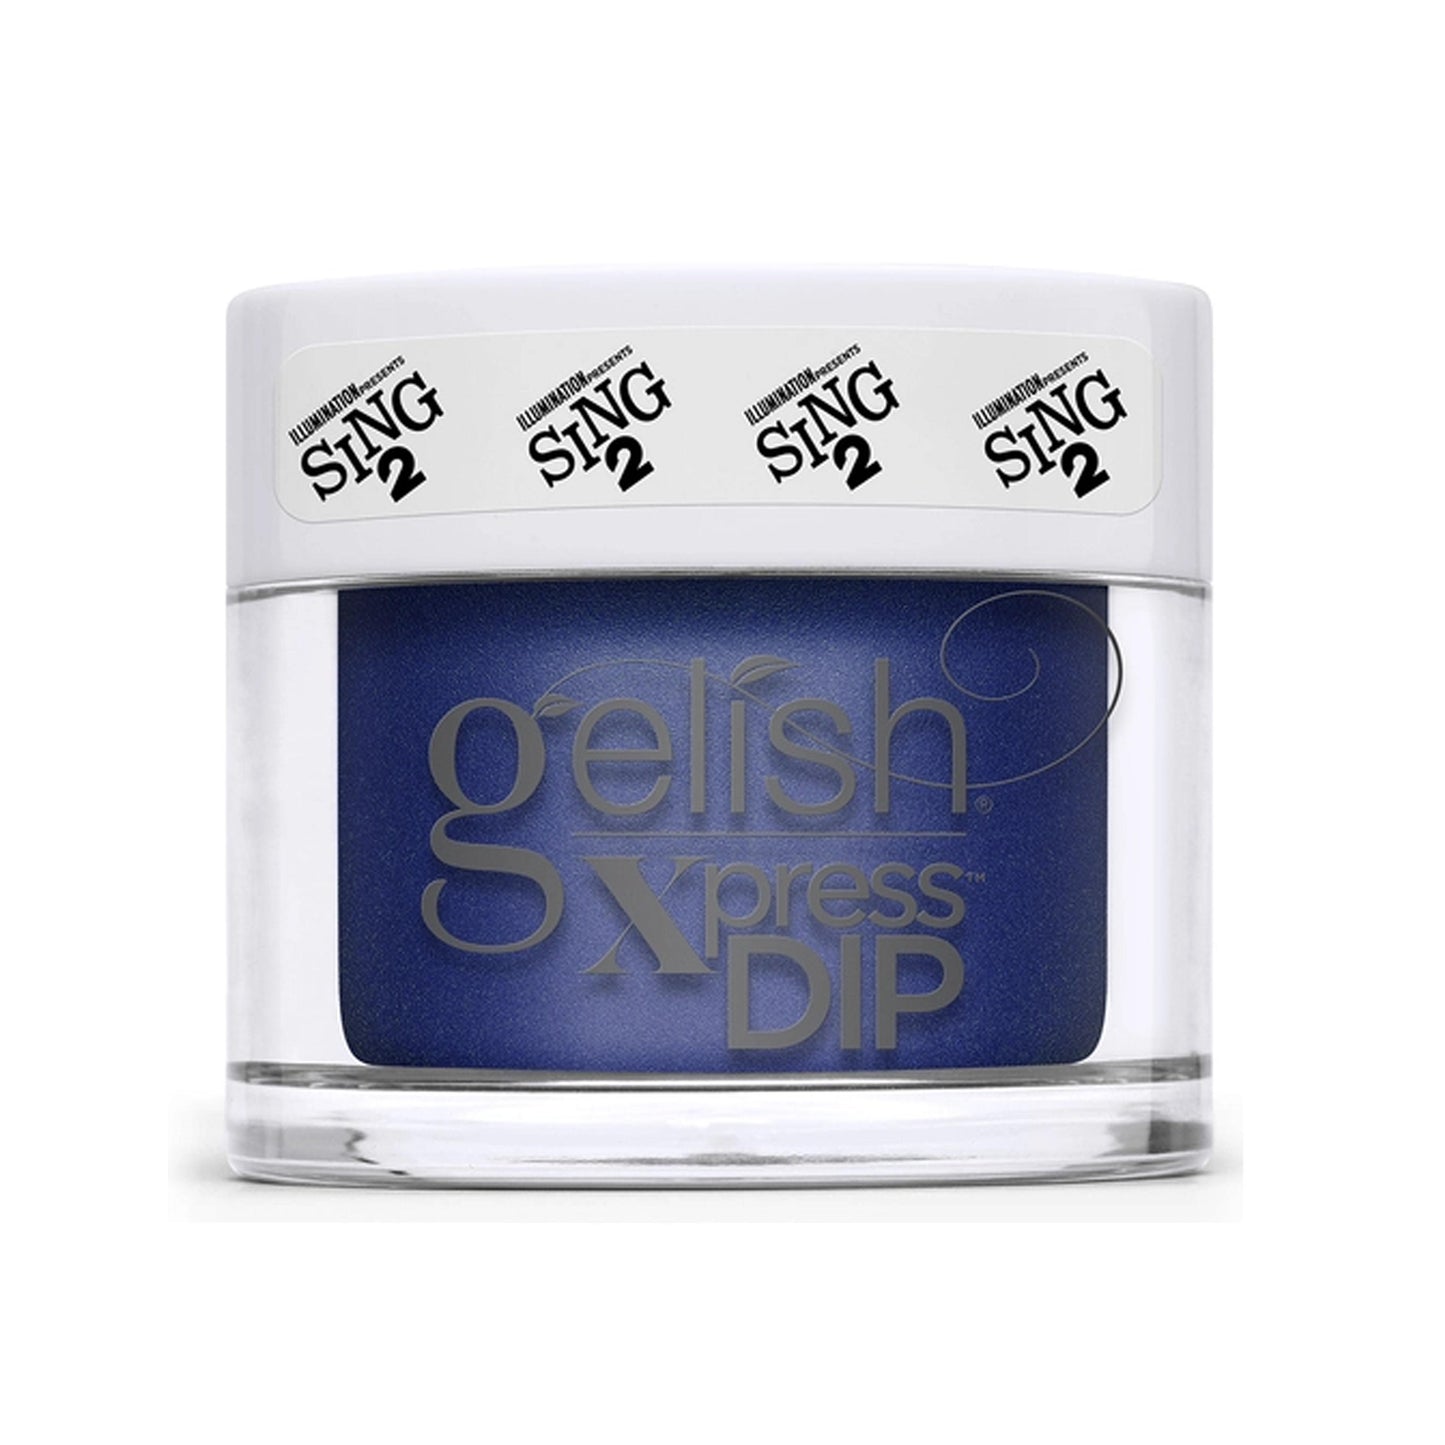 Gelish Xpress Dipping Powder - Breakout Star 1.5oz - Sanida Beauty